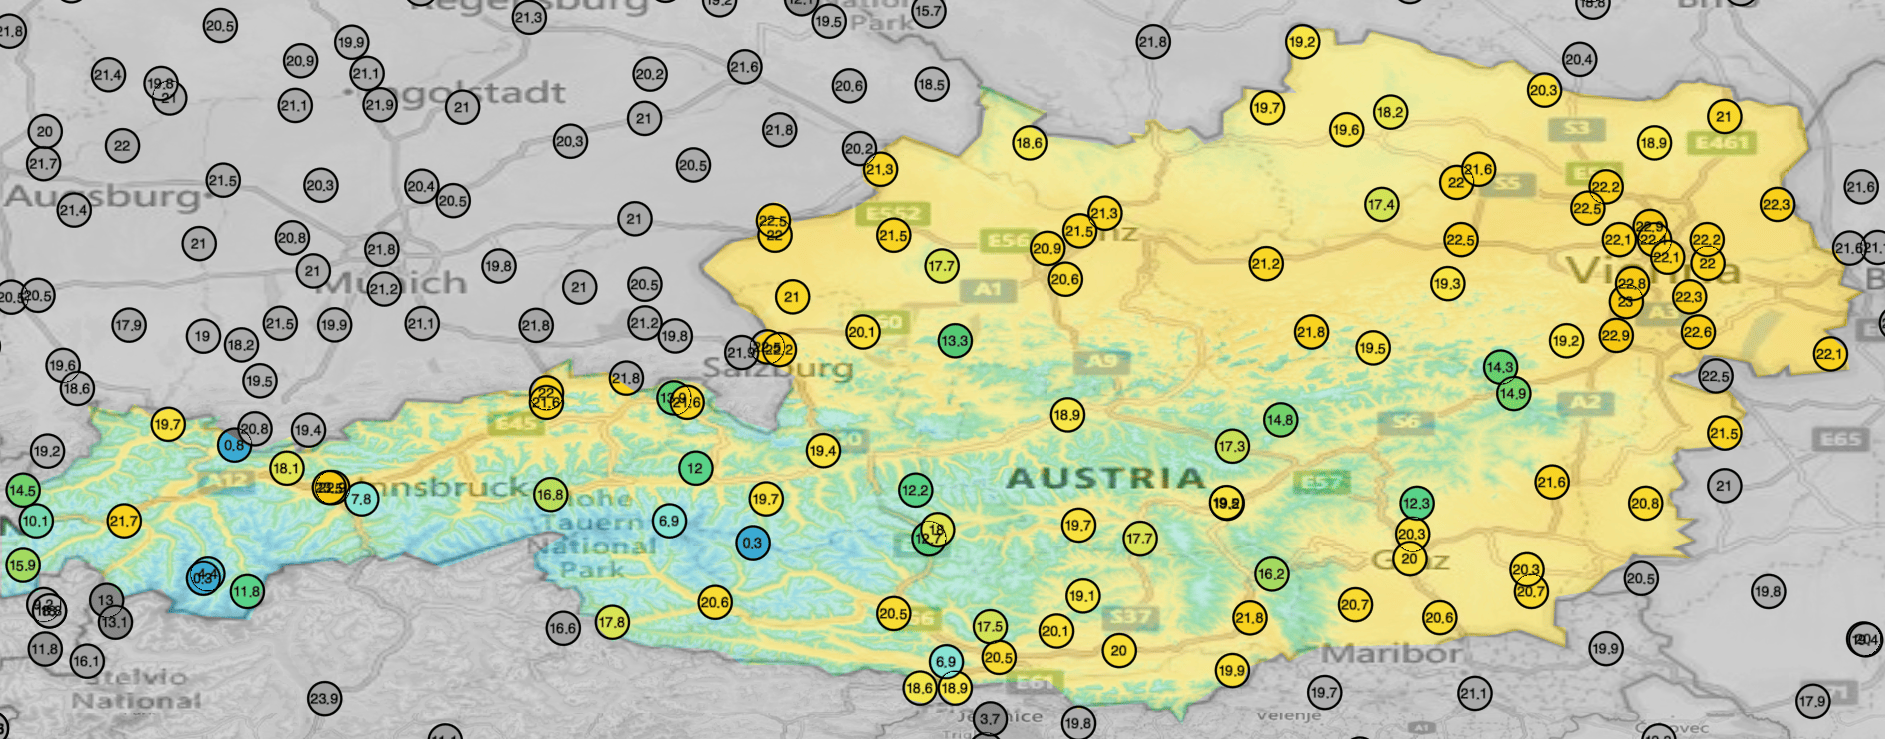 weather stations austria